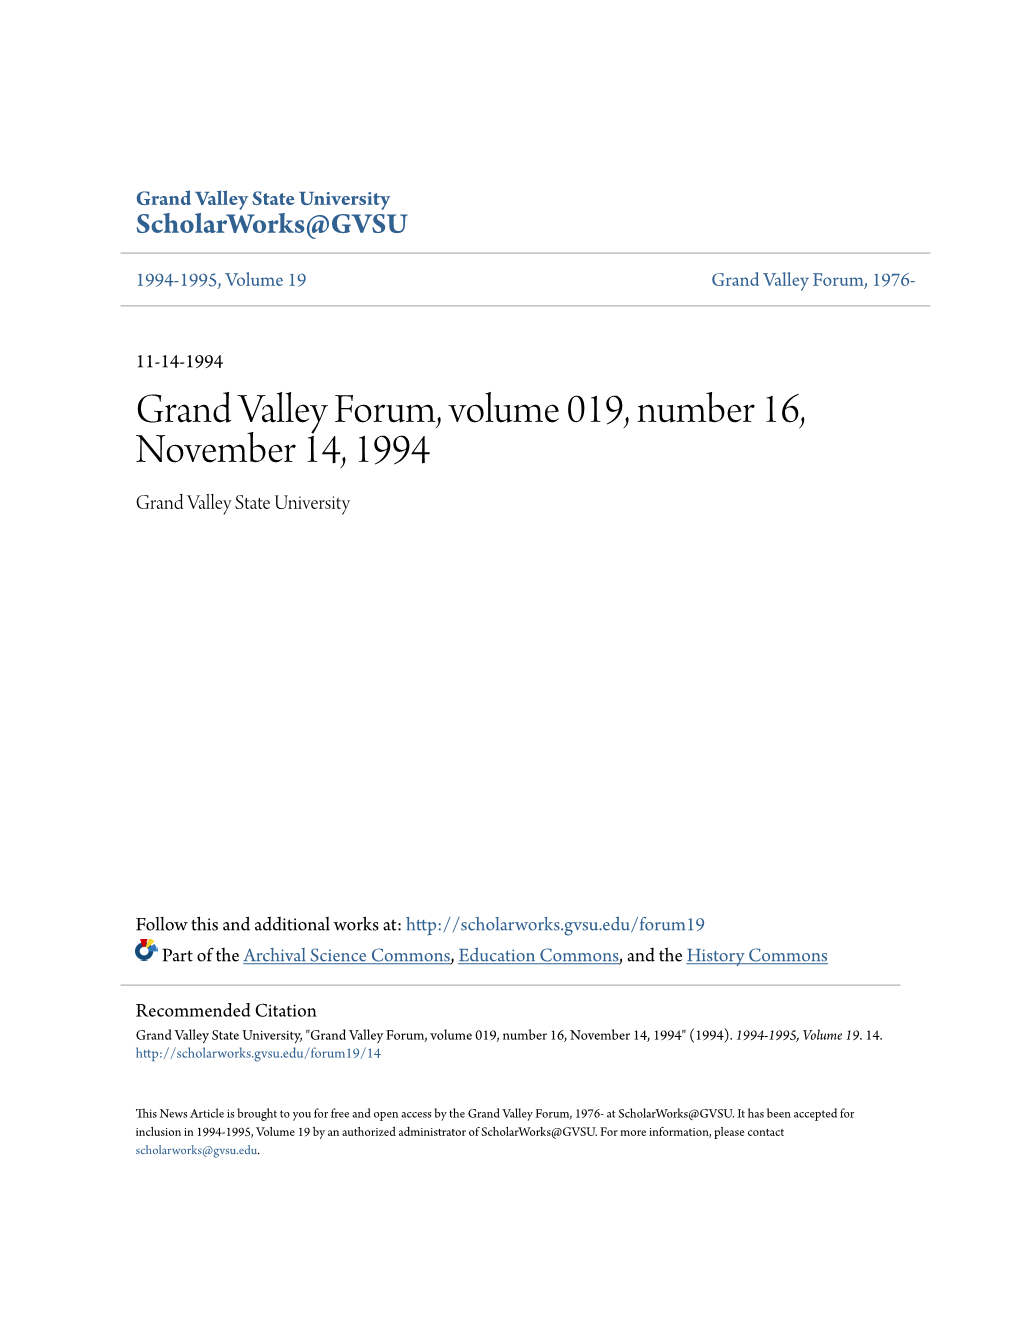 Grand Valley Forum, Volume 019, Number 16, November 14, 1994 Grand Valley State University